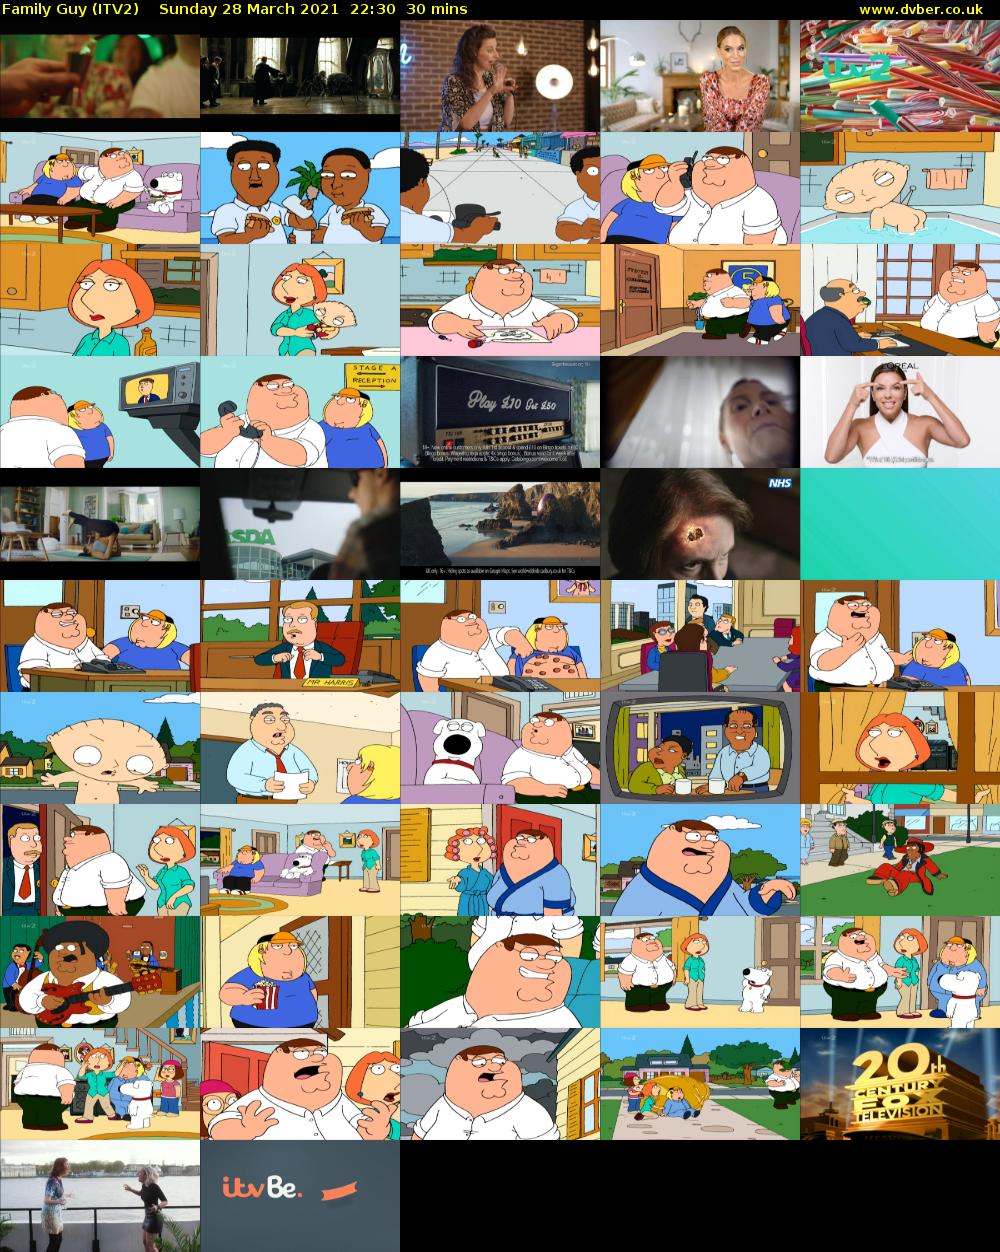 Family Guy (ITV2) Sunday 28 March 2021 22:30 - 23:00